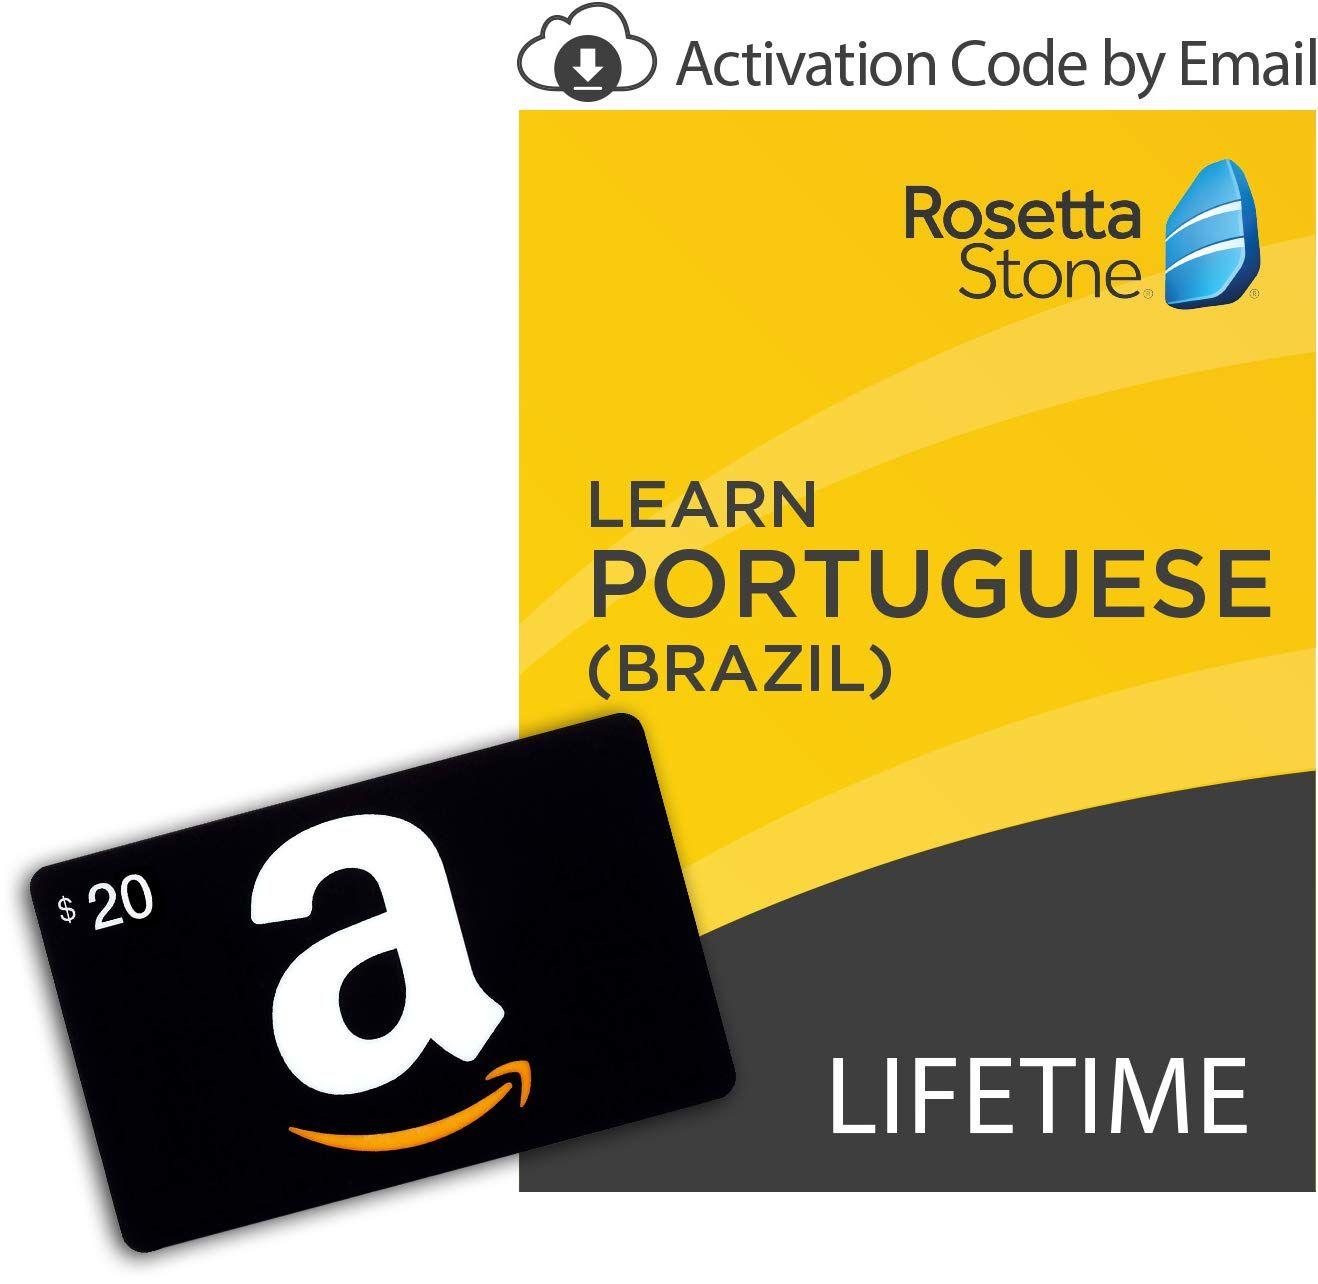 Rosetta Stone Logo - Rosetta Stone: Learn Portuguese (Brazil) Lifetime